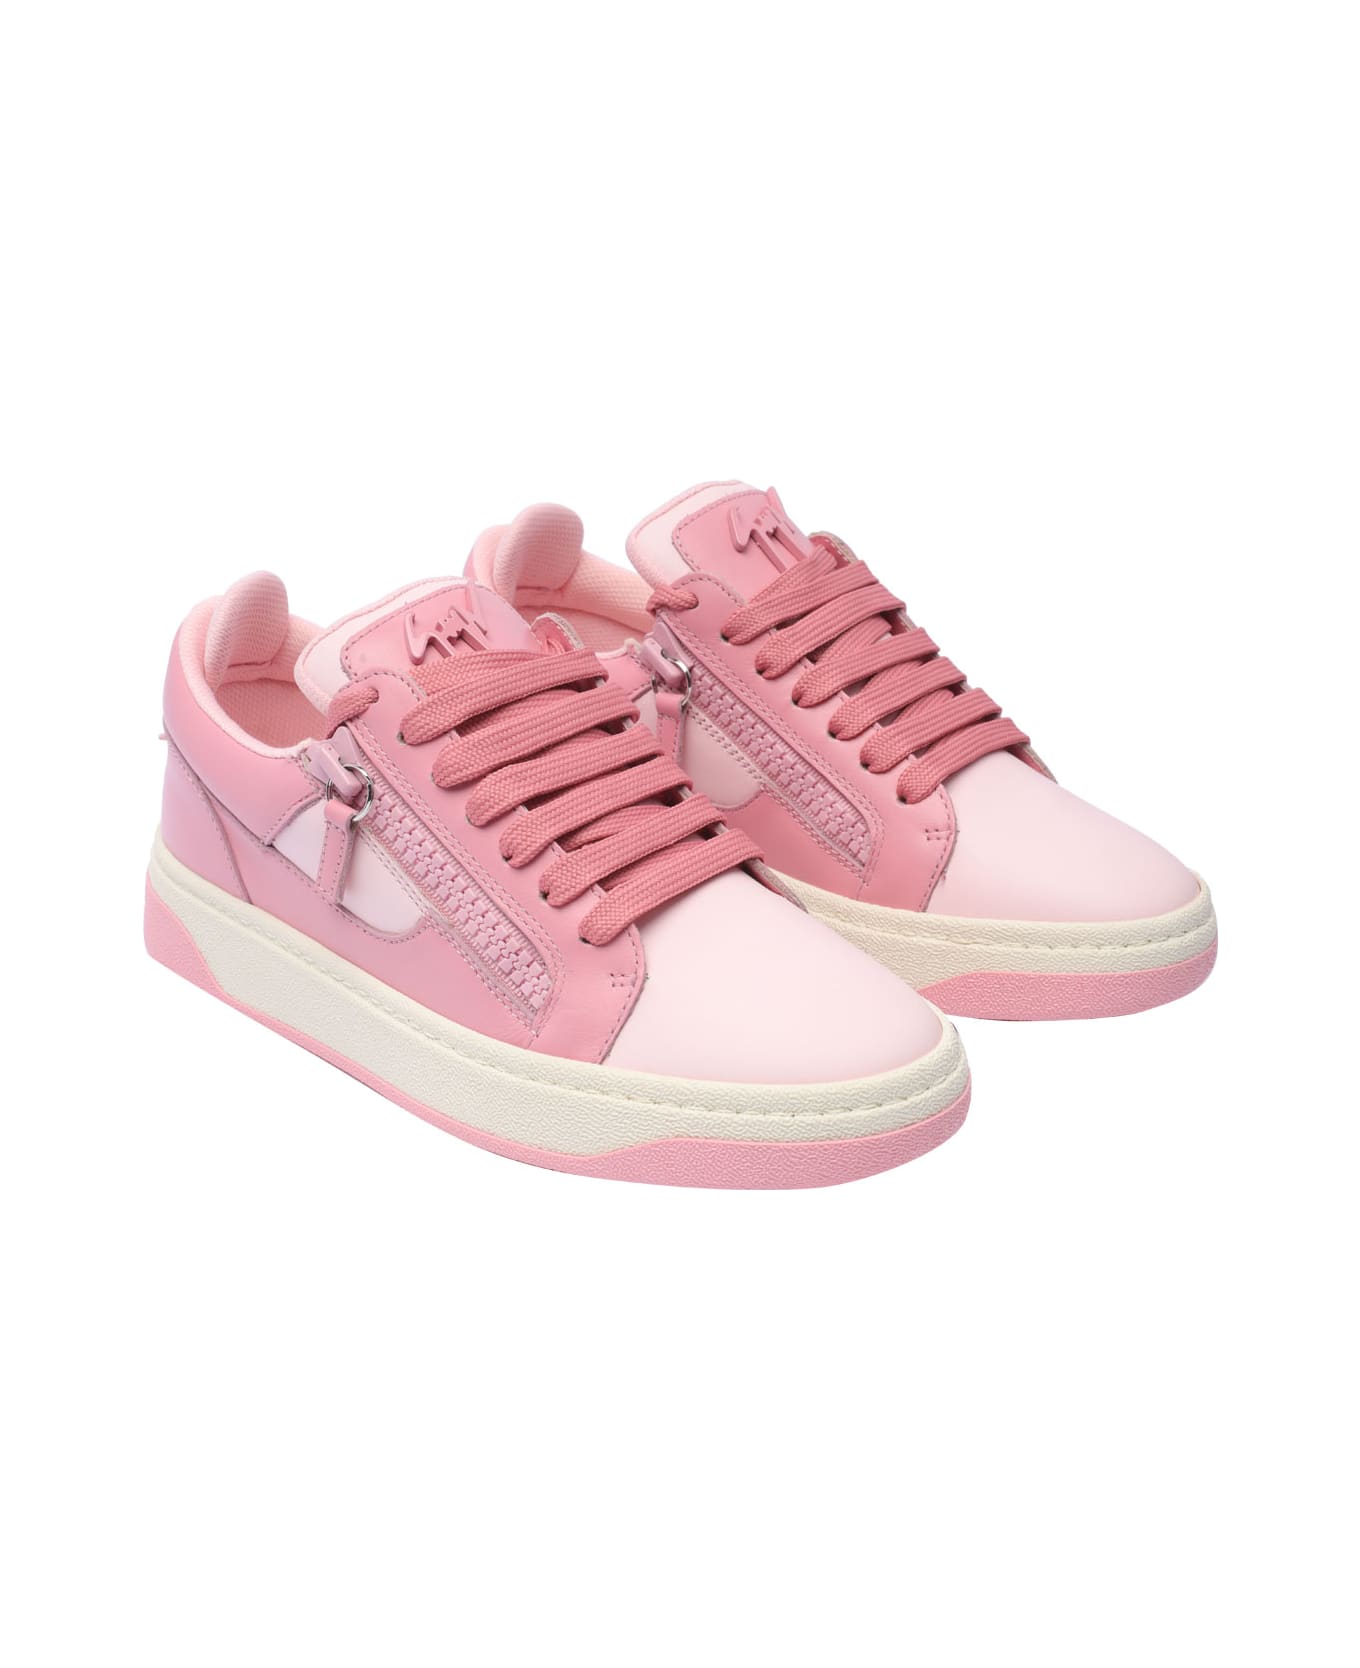 Giuseppe Zanotti Gz94 Sneakers - Pink